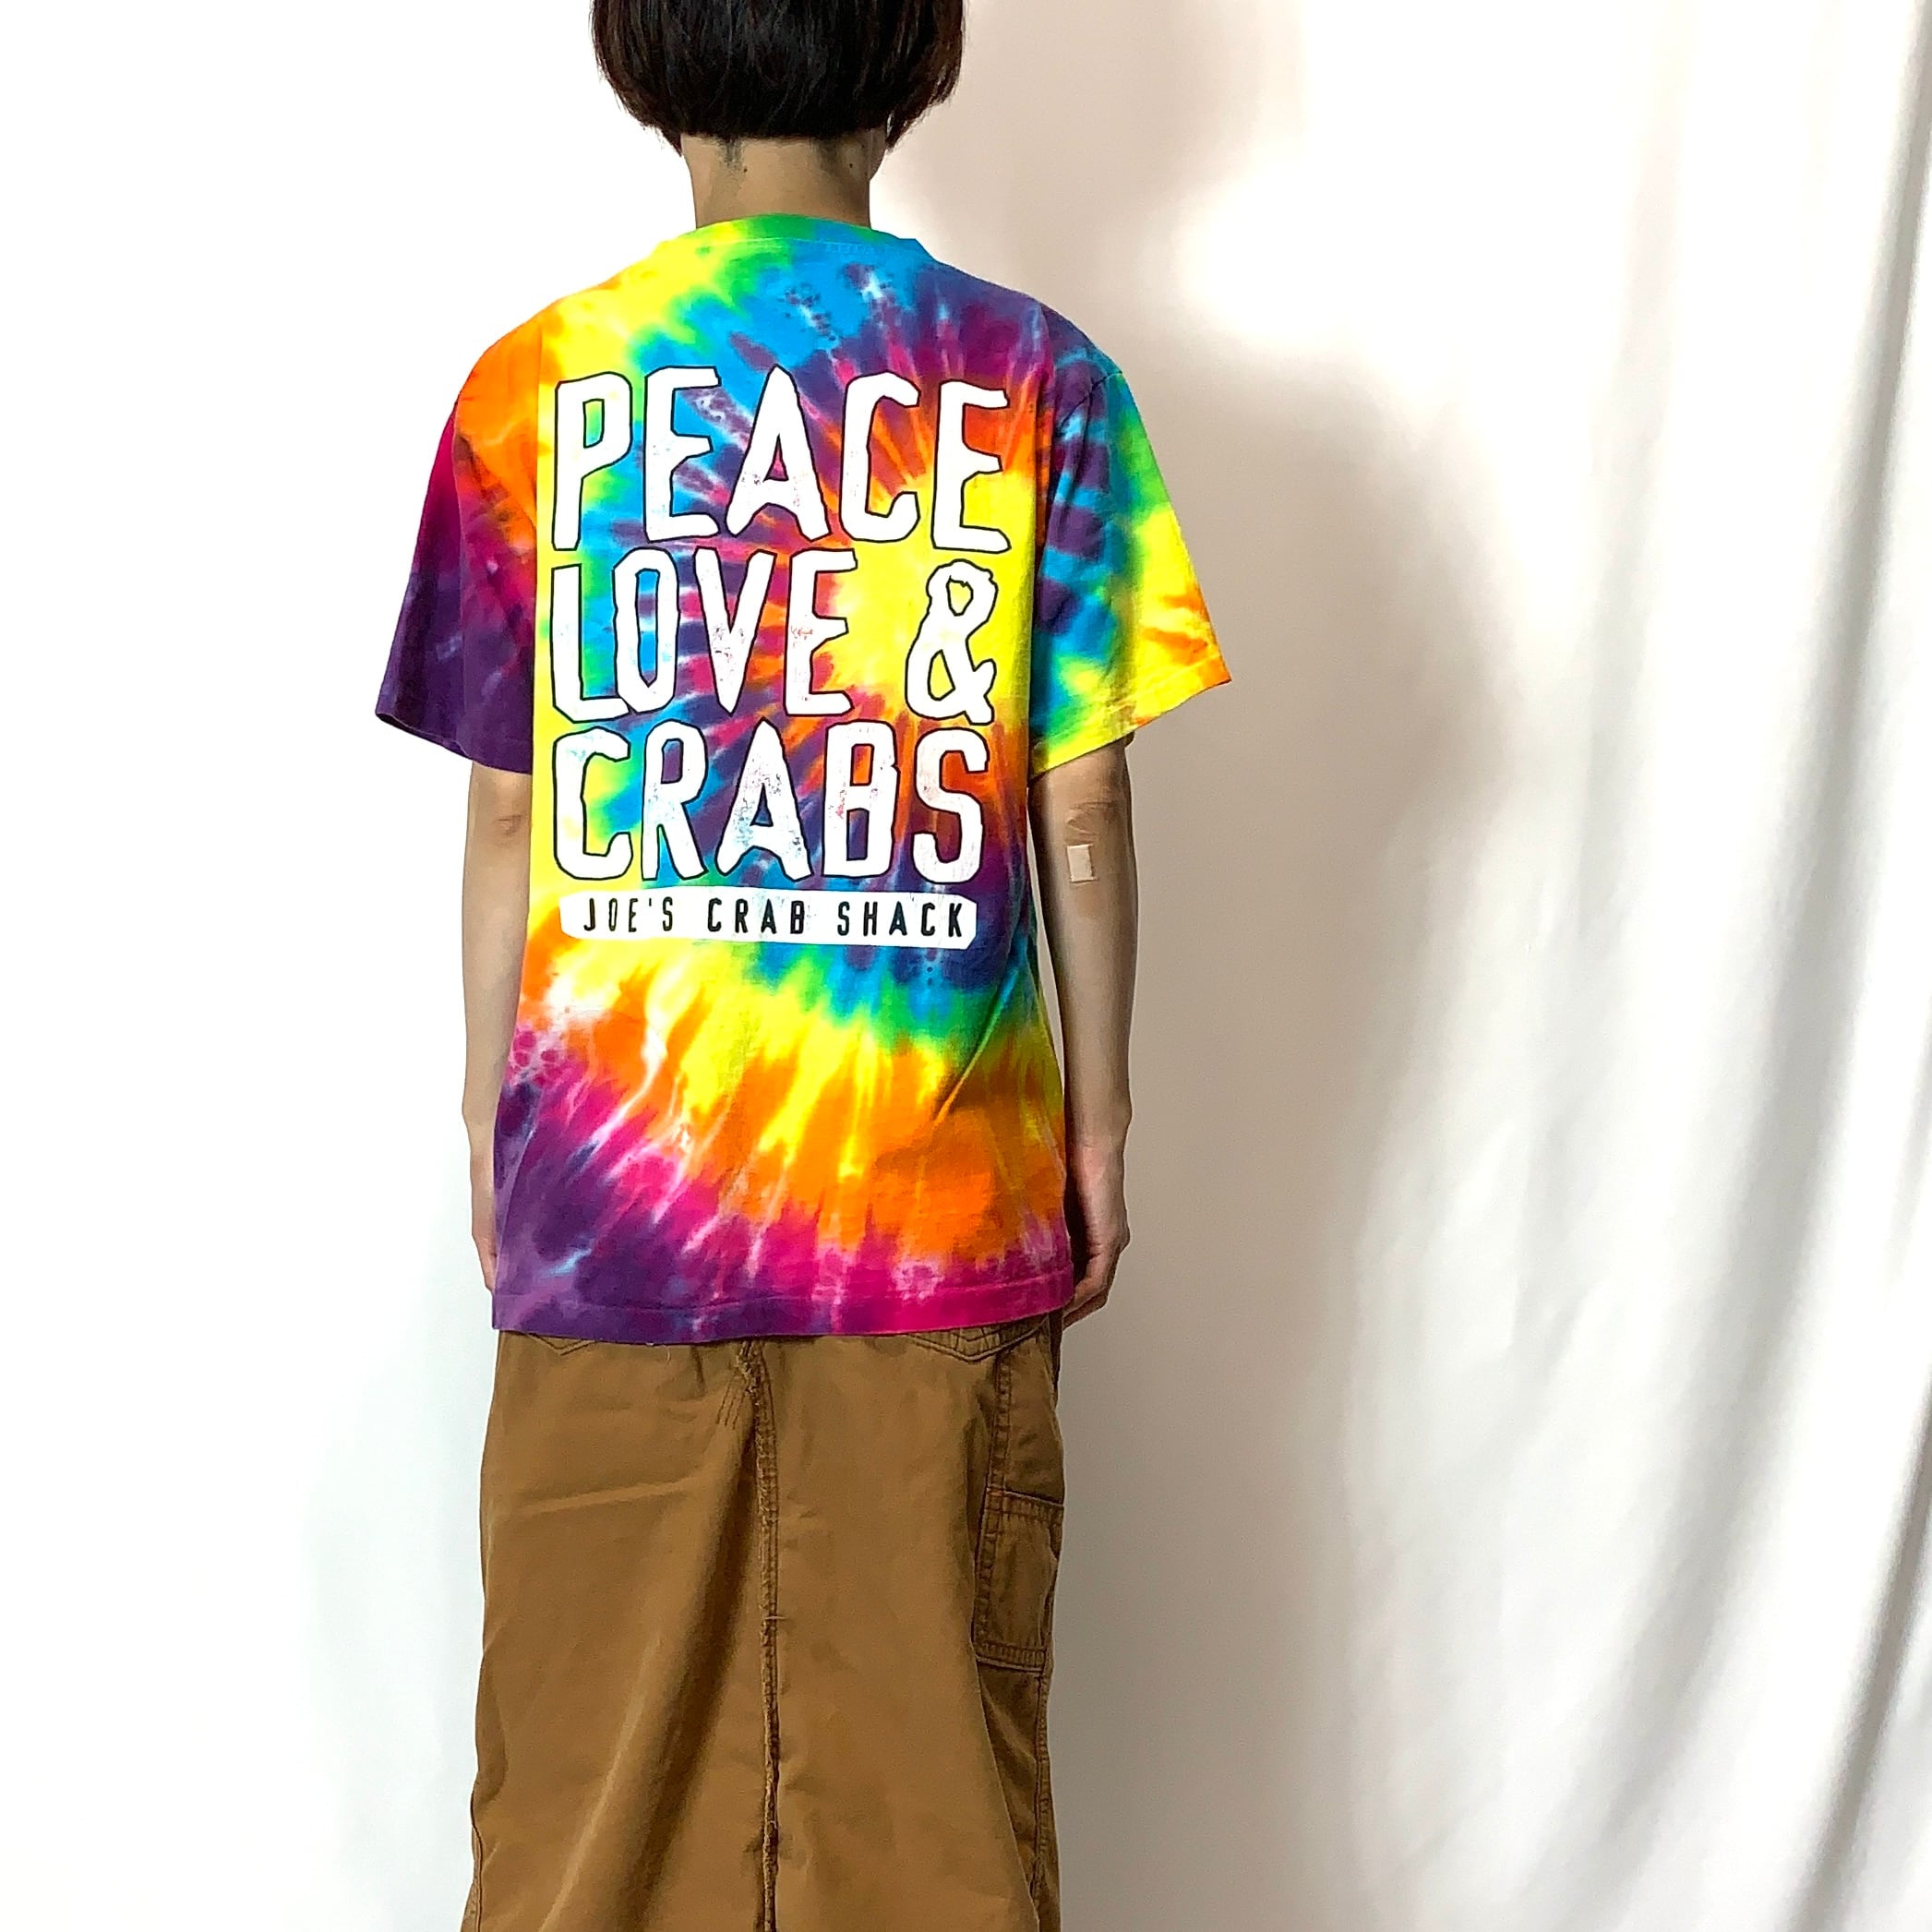 90's Vintage Tshirts PEACE printed